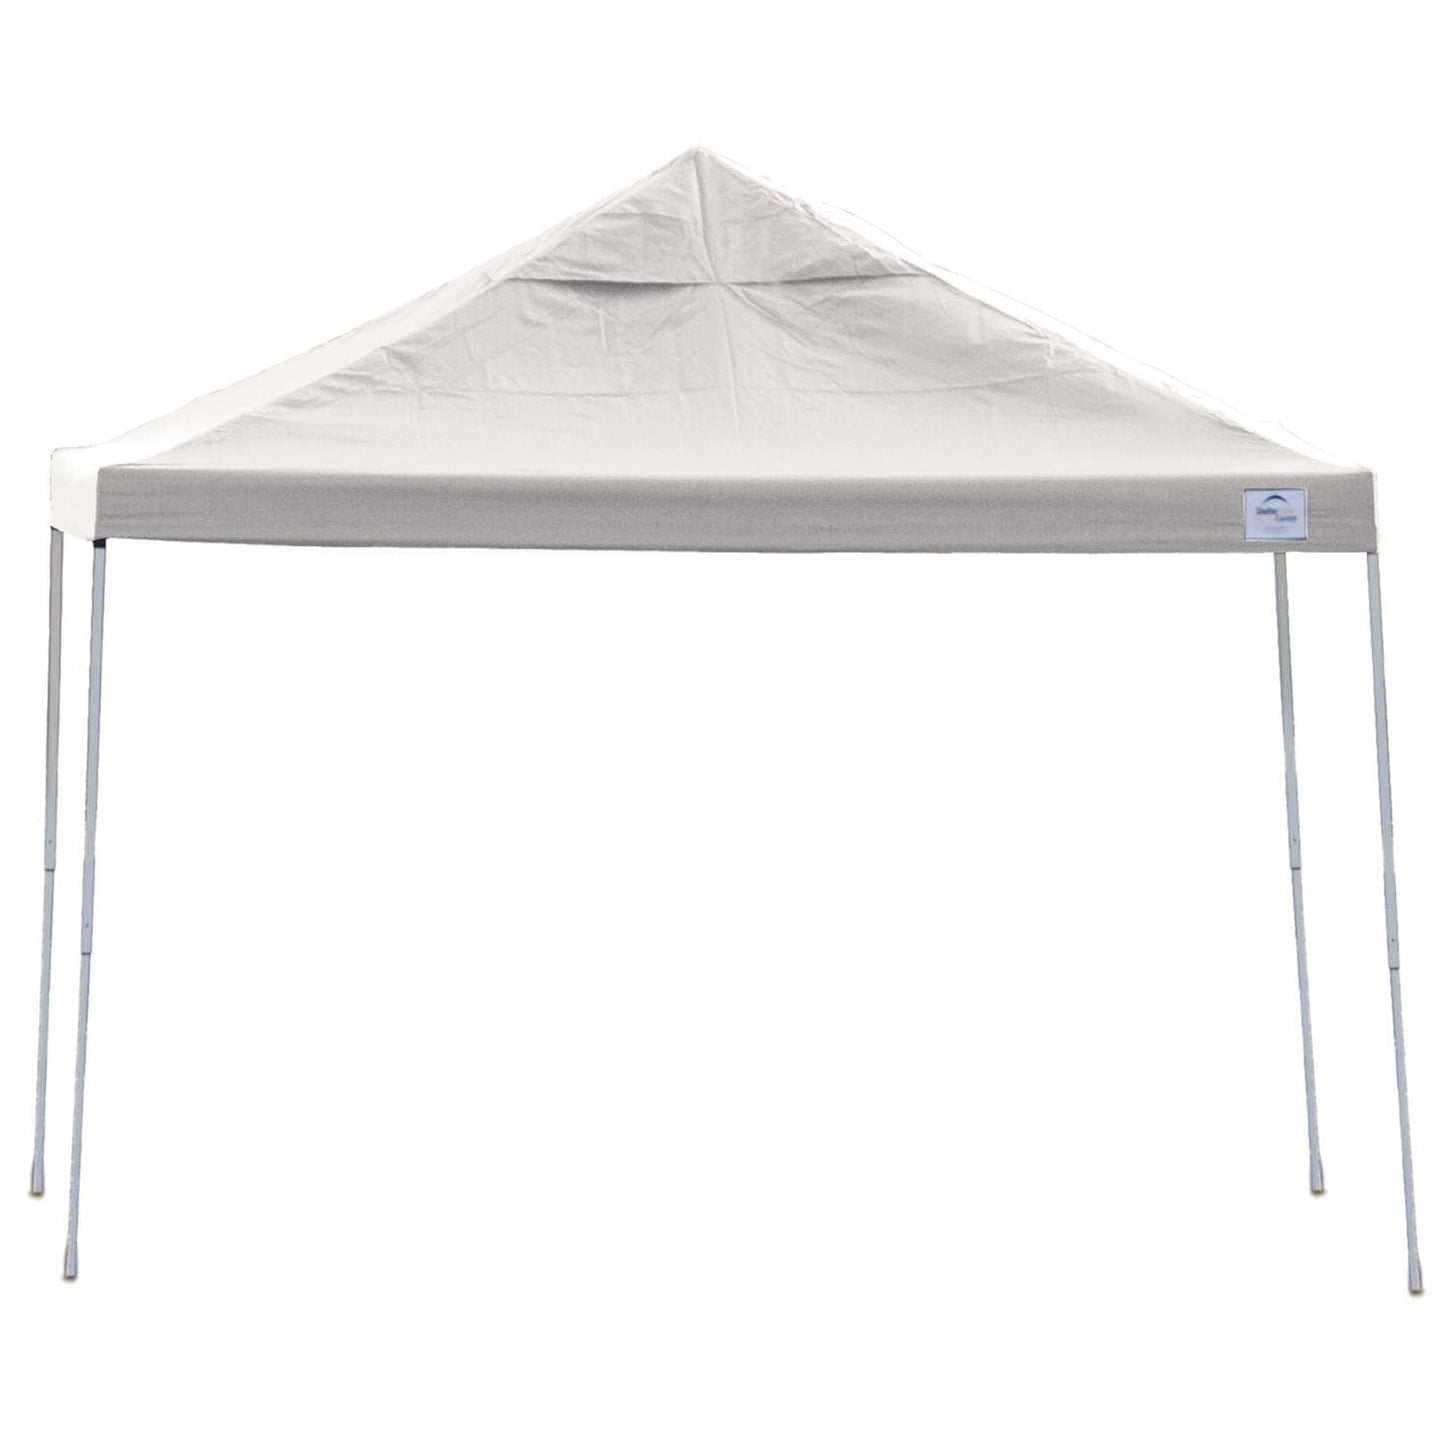 ShelterLogic Pop-Up Canopies ShelterLogic | Pop-Up Canopy HD - Straight Leg 12 x 12 ft. White 22538